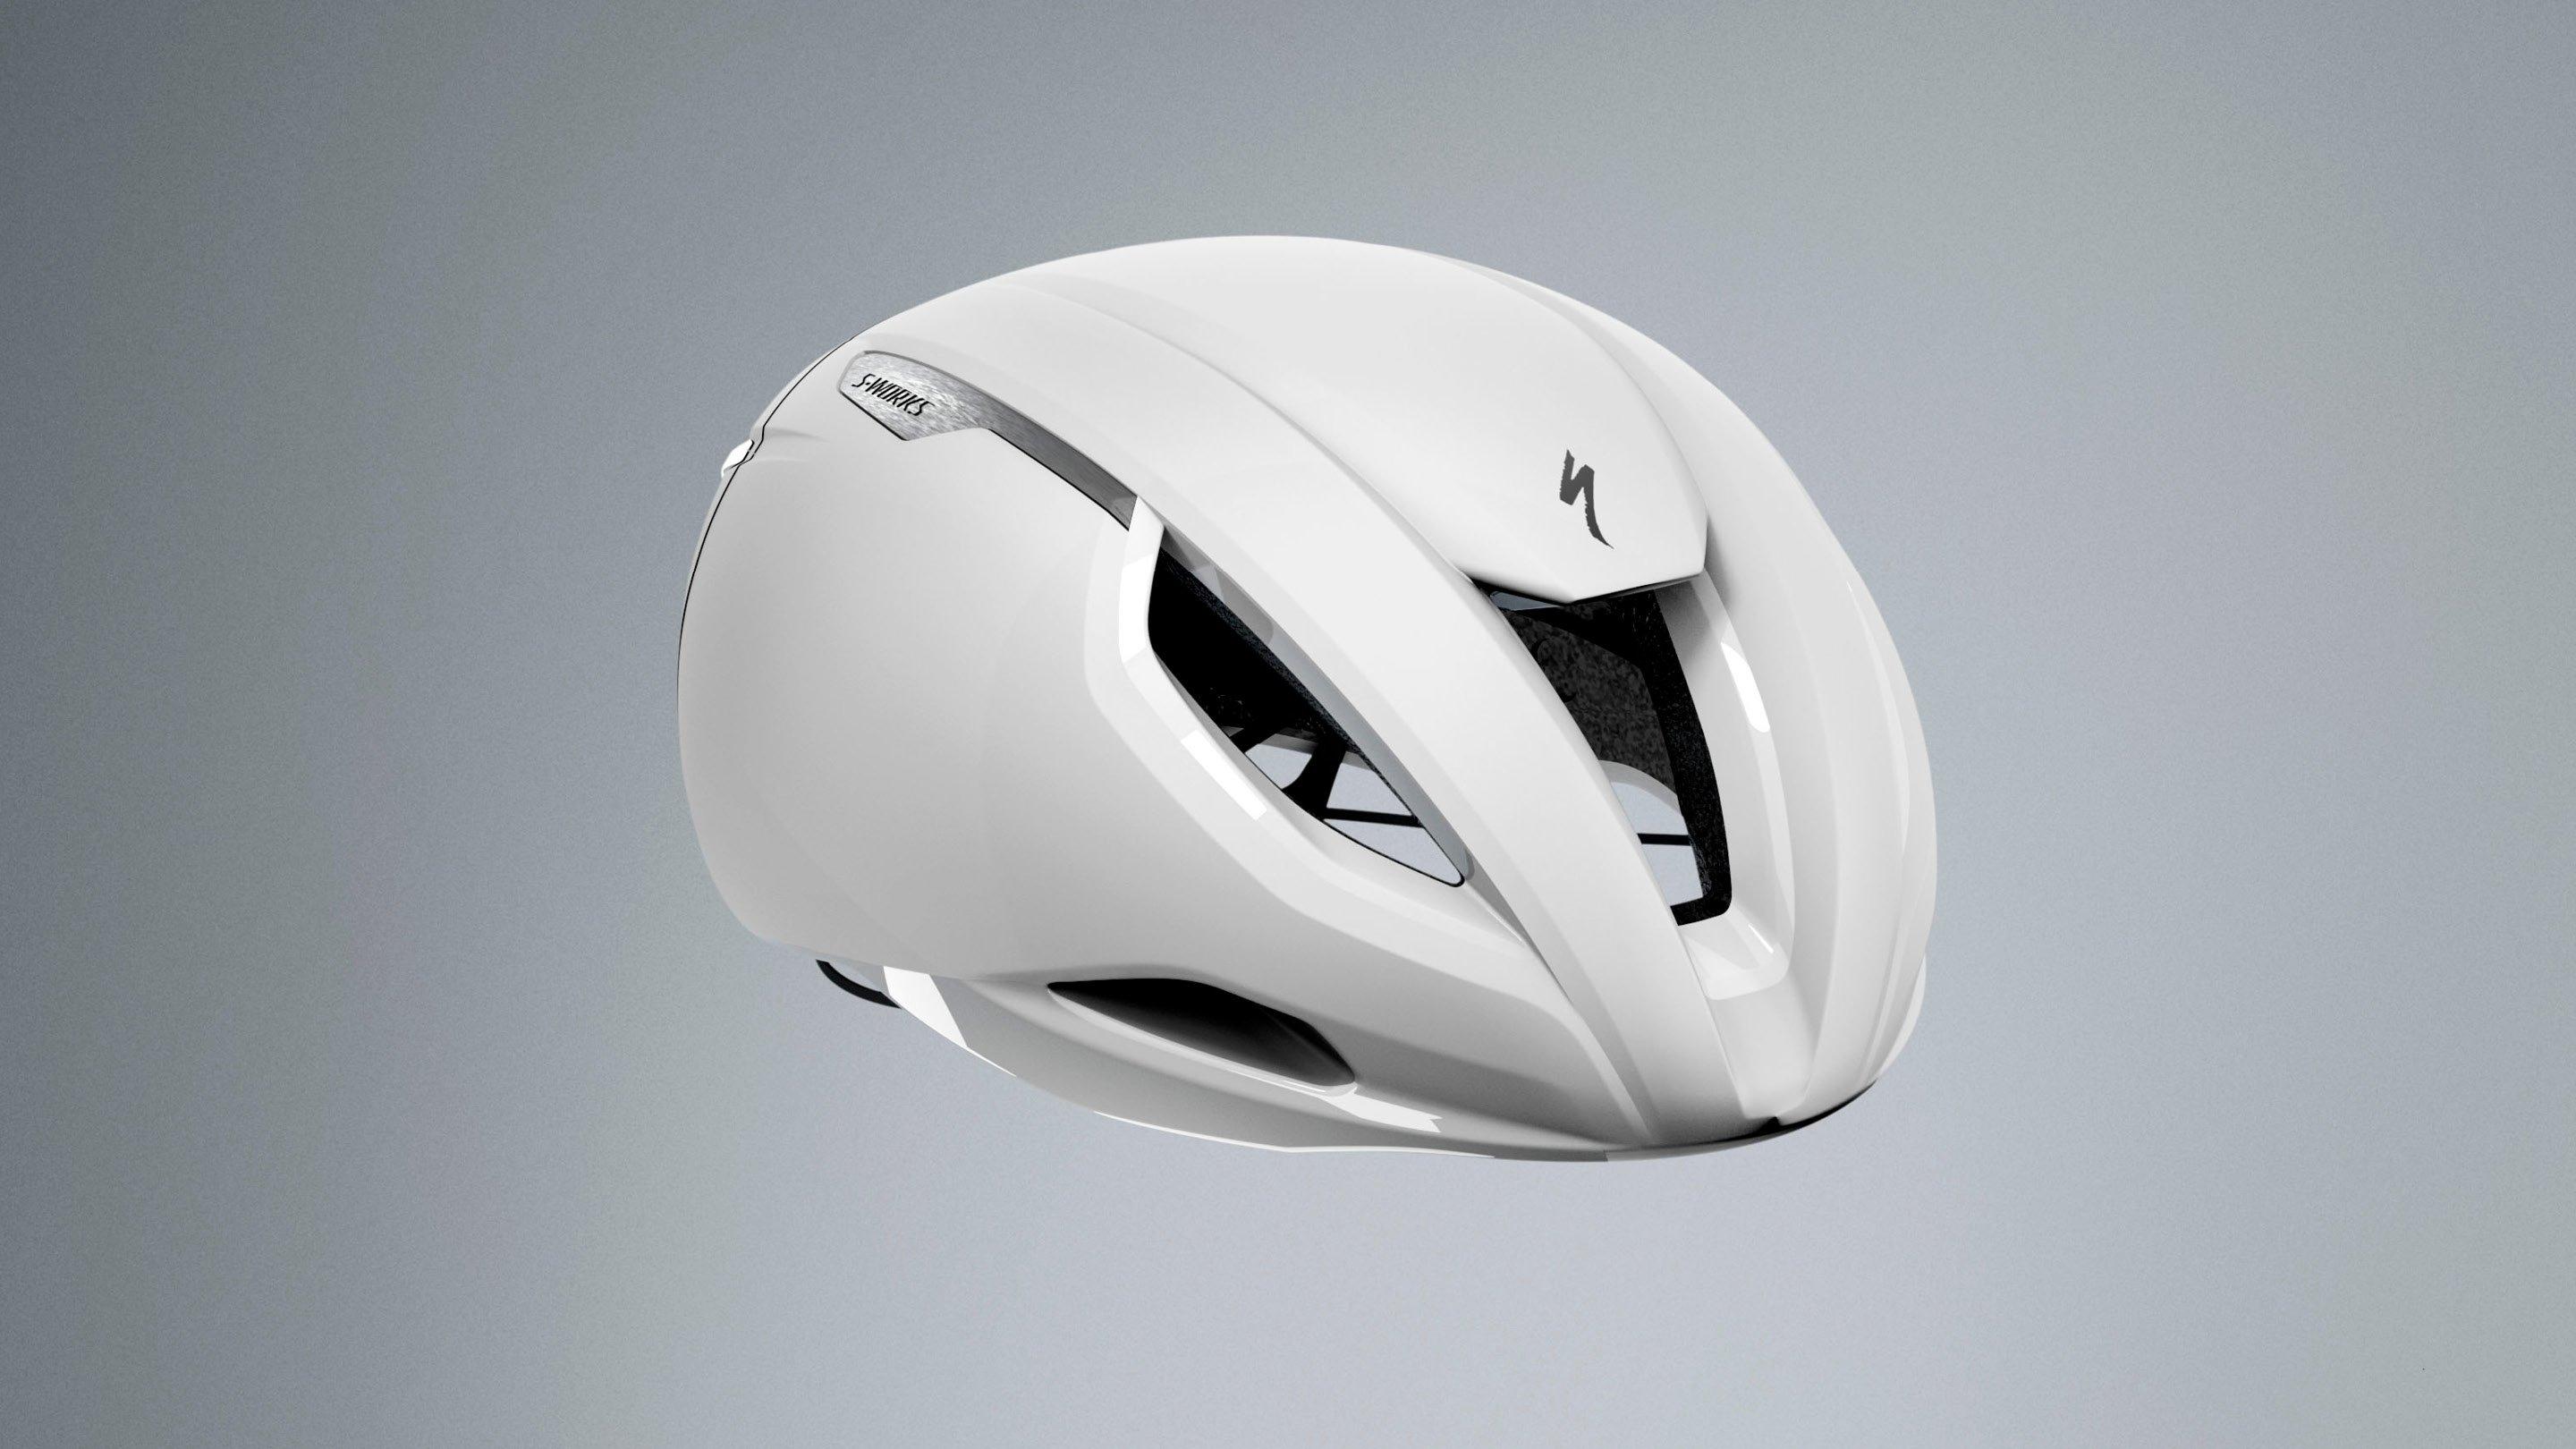 Specialized SW Evade 3 Helmet, White